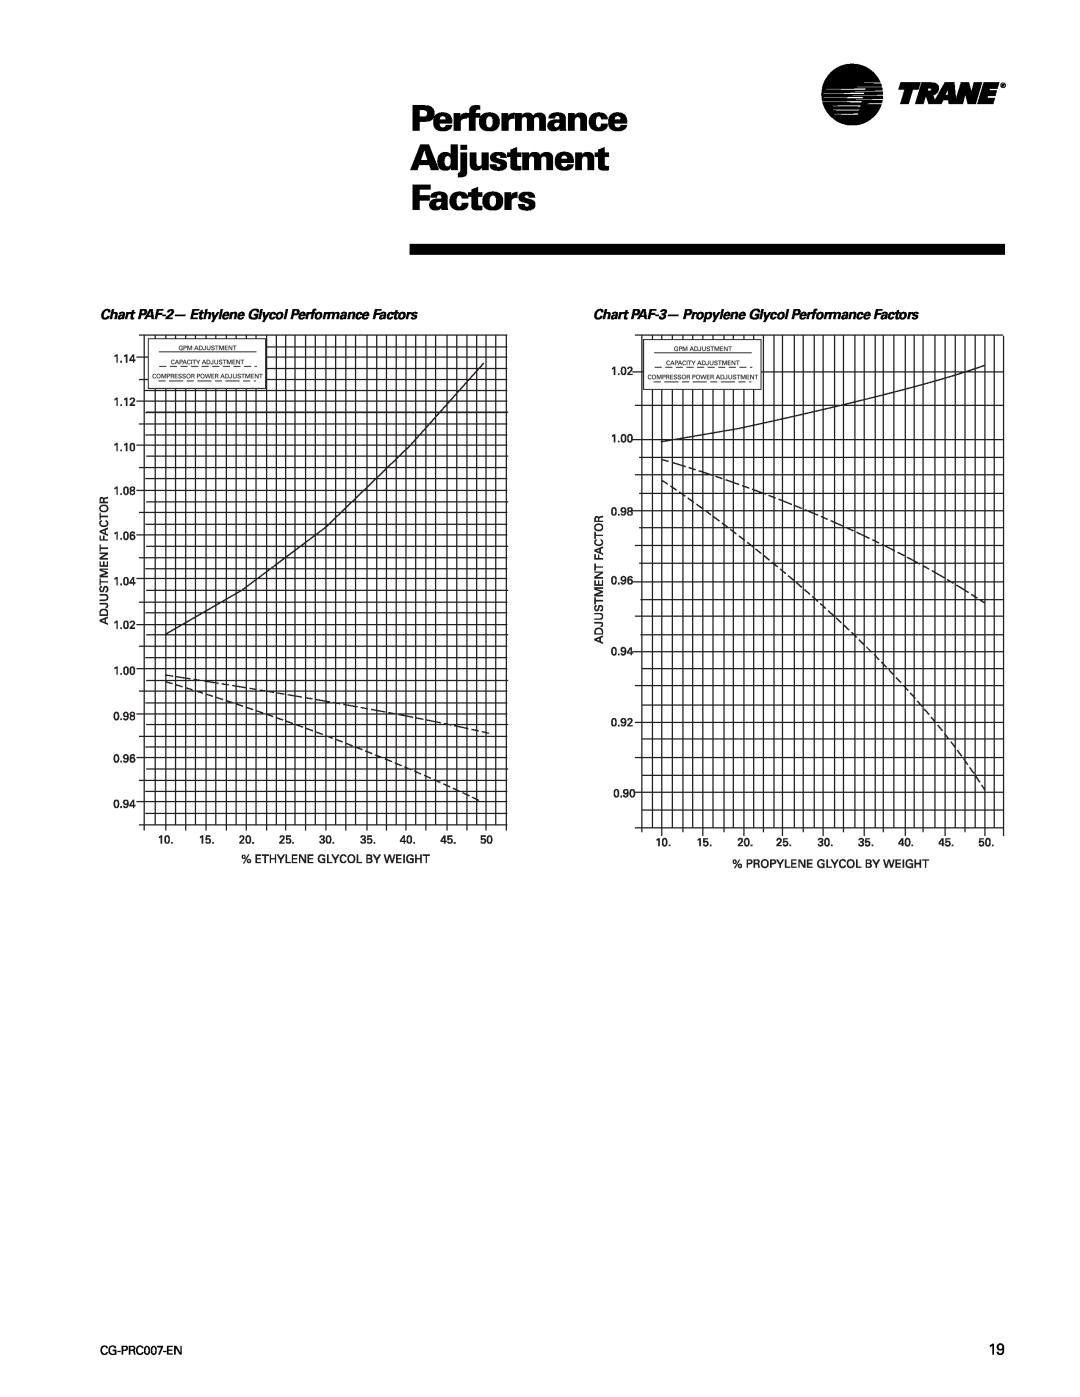 Trane CG-PRC007-EN manual Performance Adjustment Factors, Chart PAF-2-Ethylene Glycol Performance Factors 